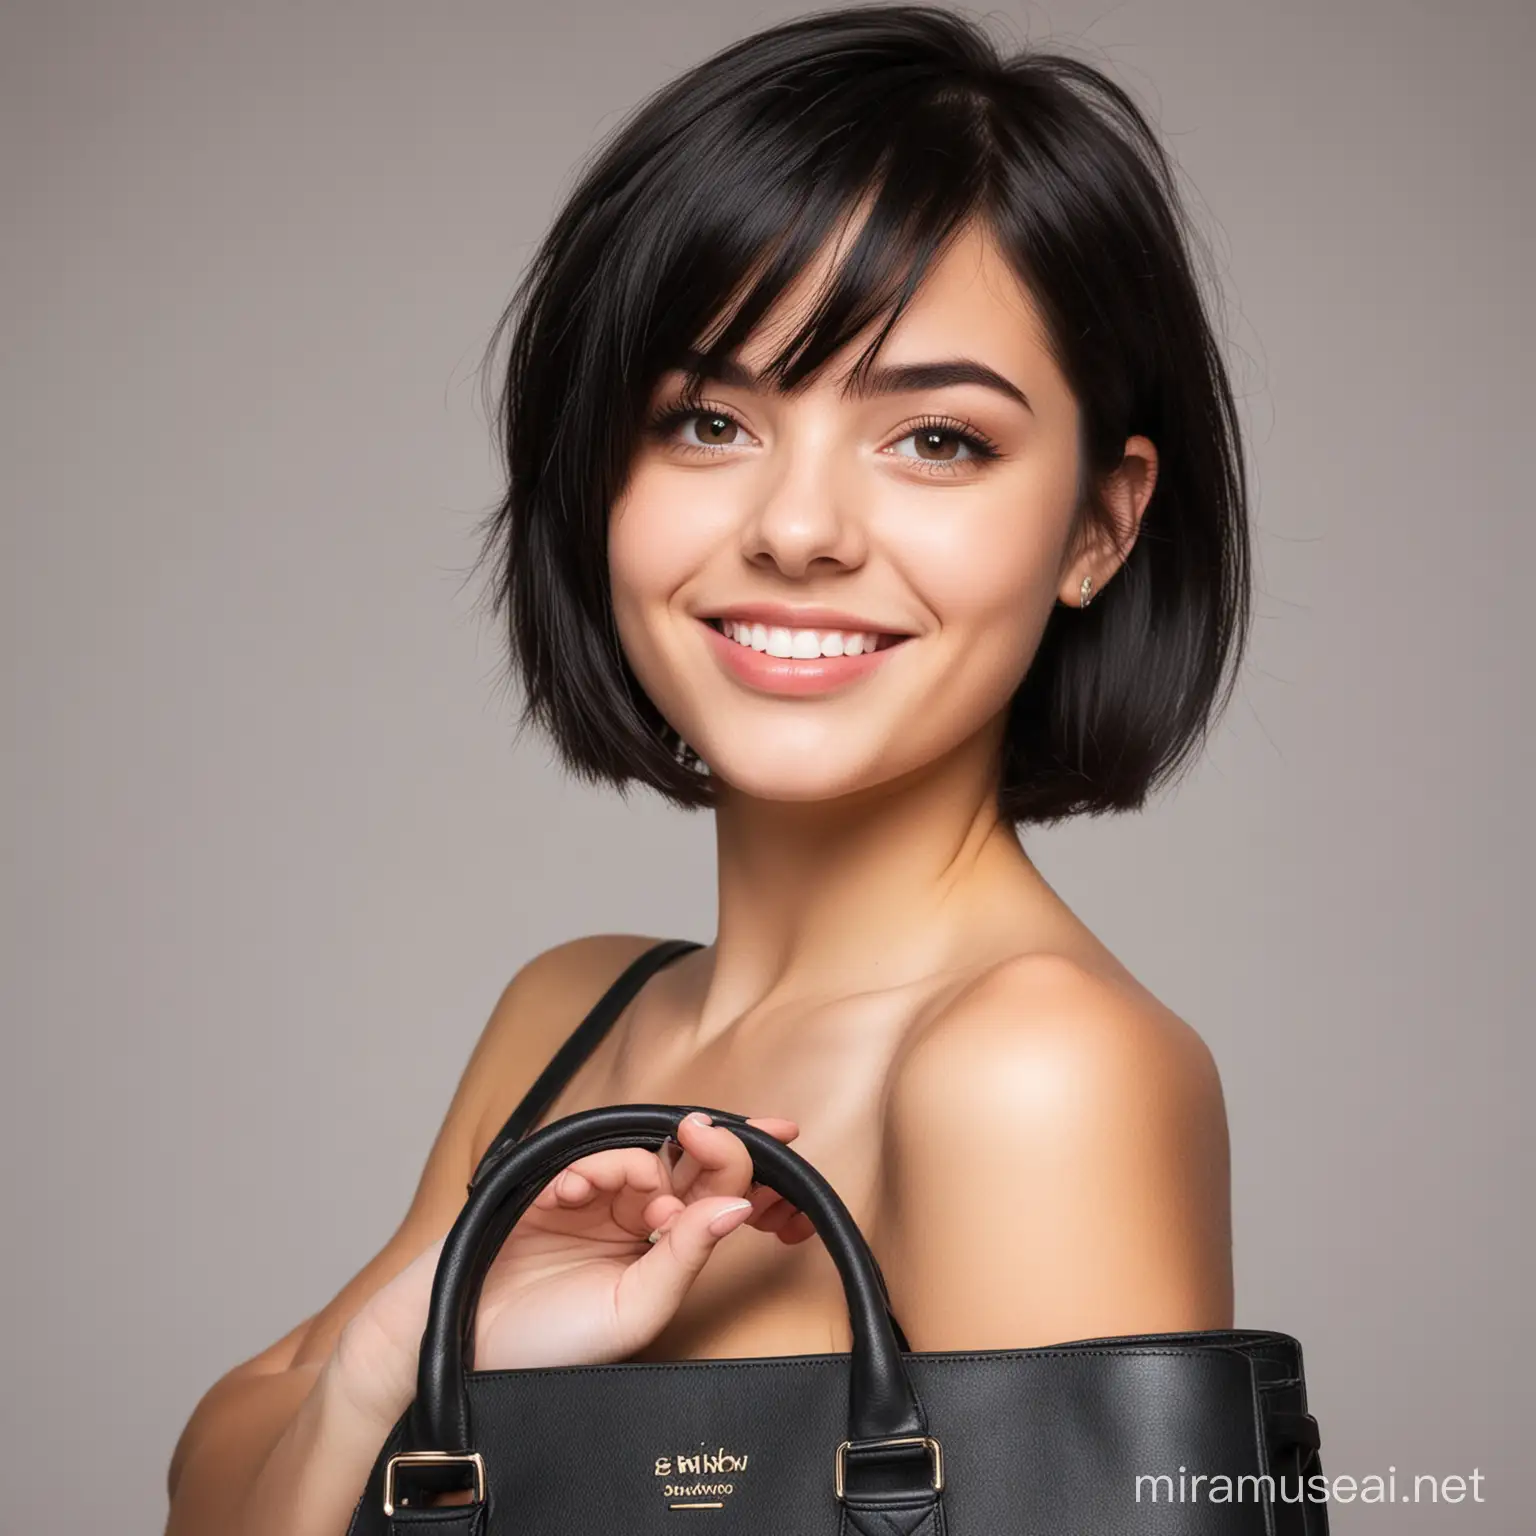 Confident Teen Girl with Short Black Hair Carrying Handbag and Smirking